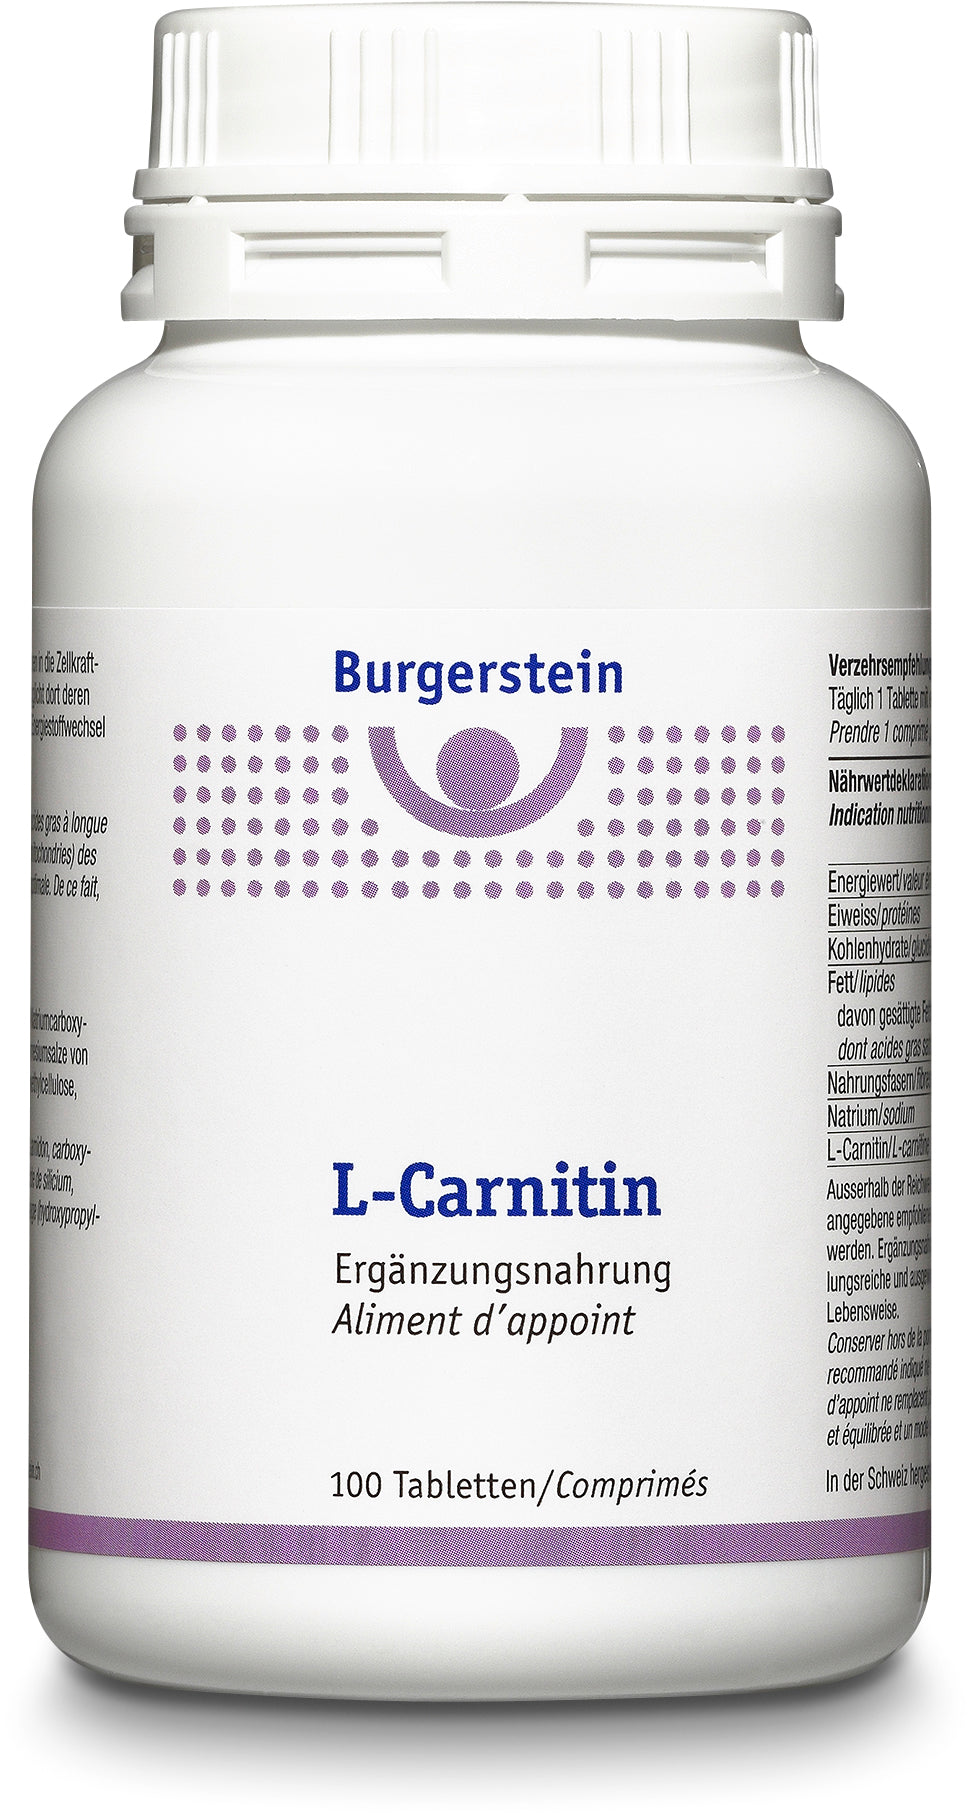 BURGERSTEIN L-Carnitin comprimés bte 100 pièces